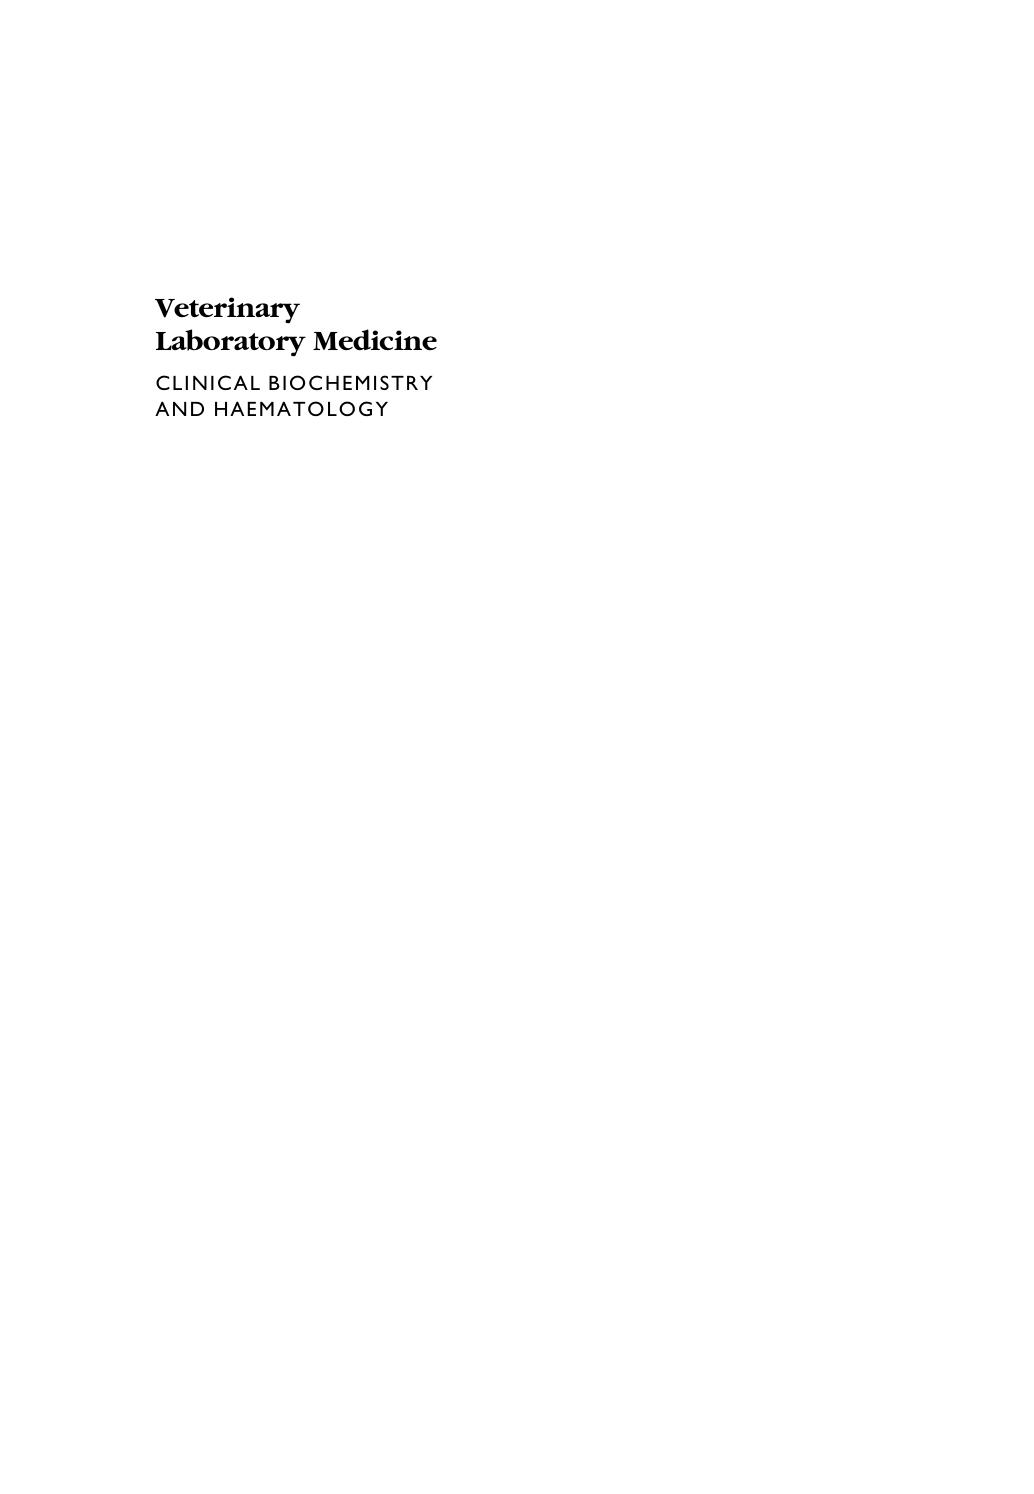 Veterinary Laboratory Medicine  Clinical Biochemistry and Haematology 2nd ed. 2002.pdf